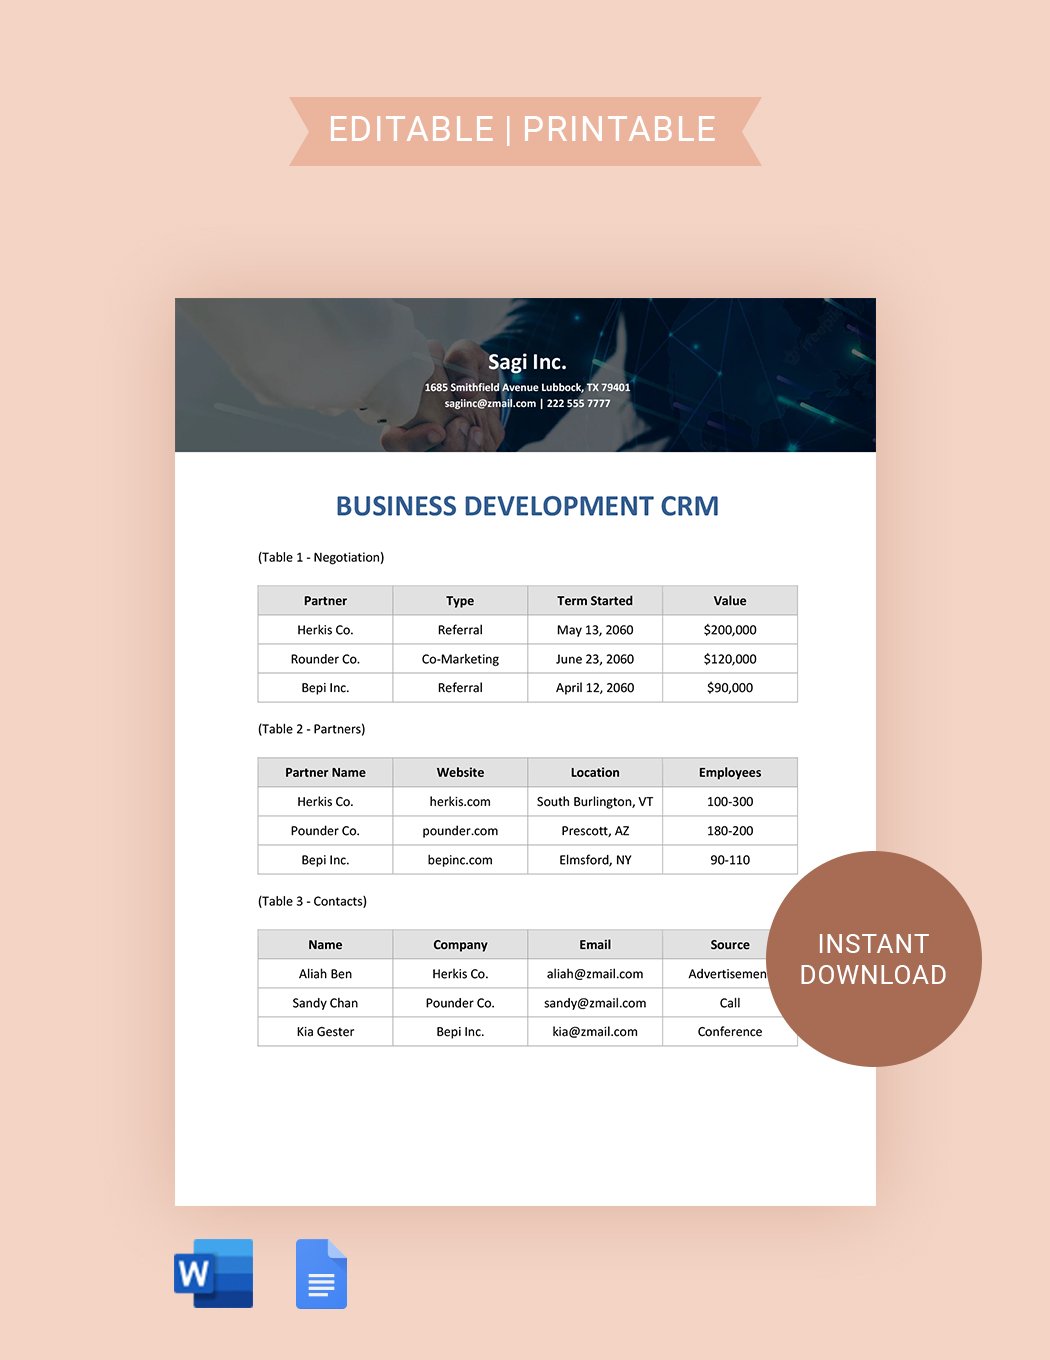 Business Development CRM Template in Word, Google Docs